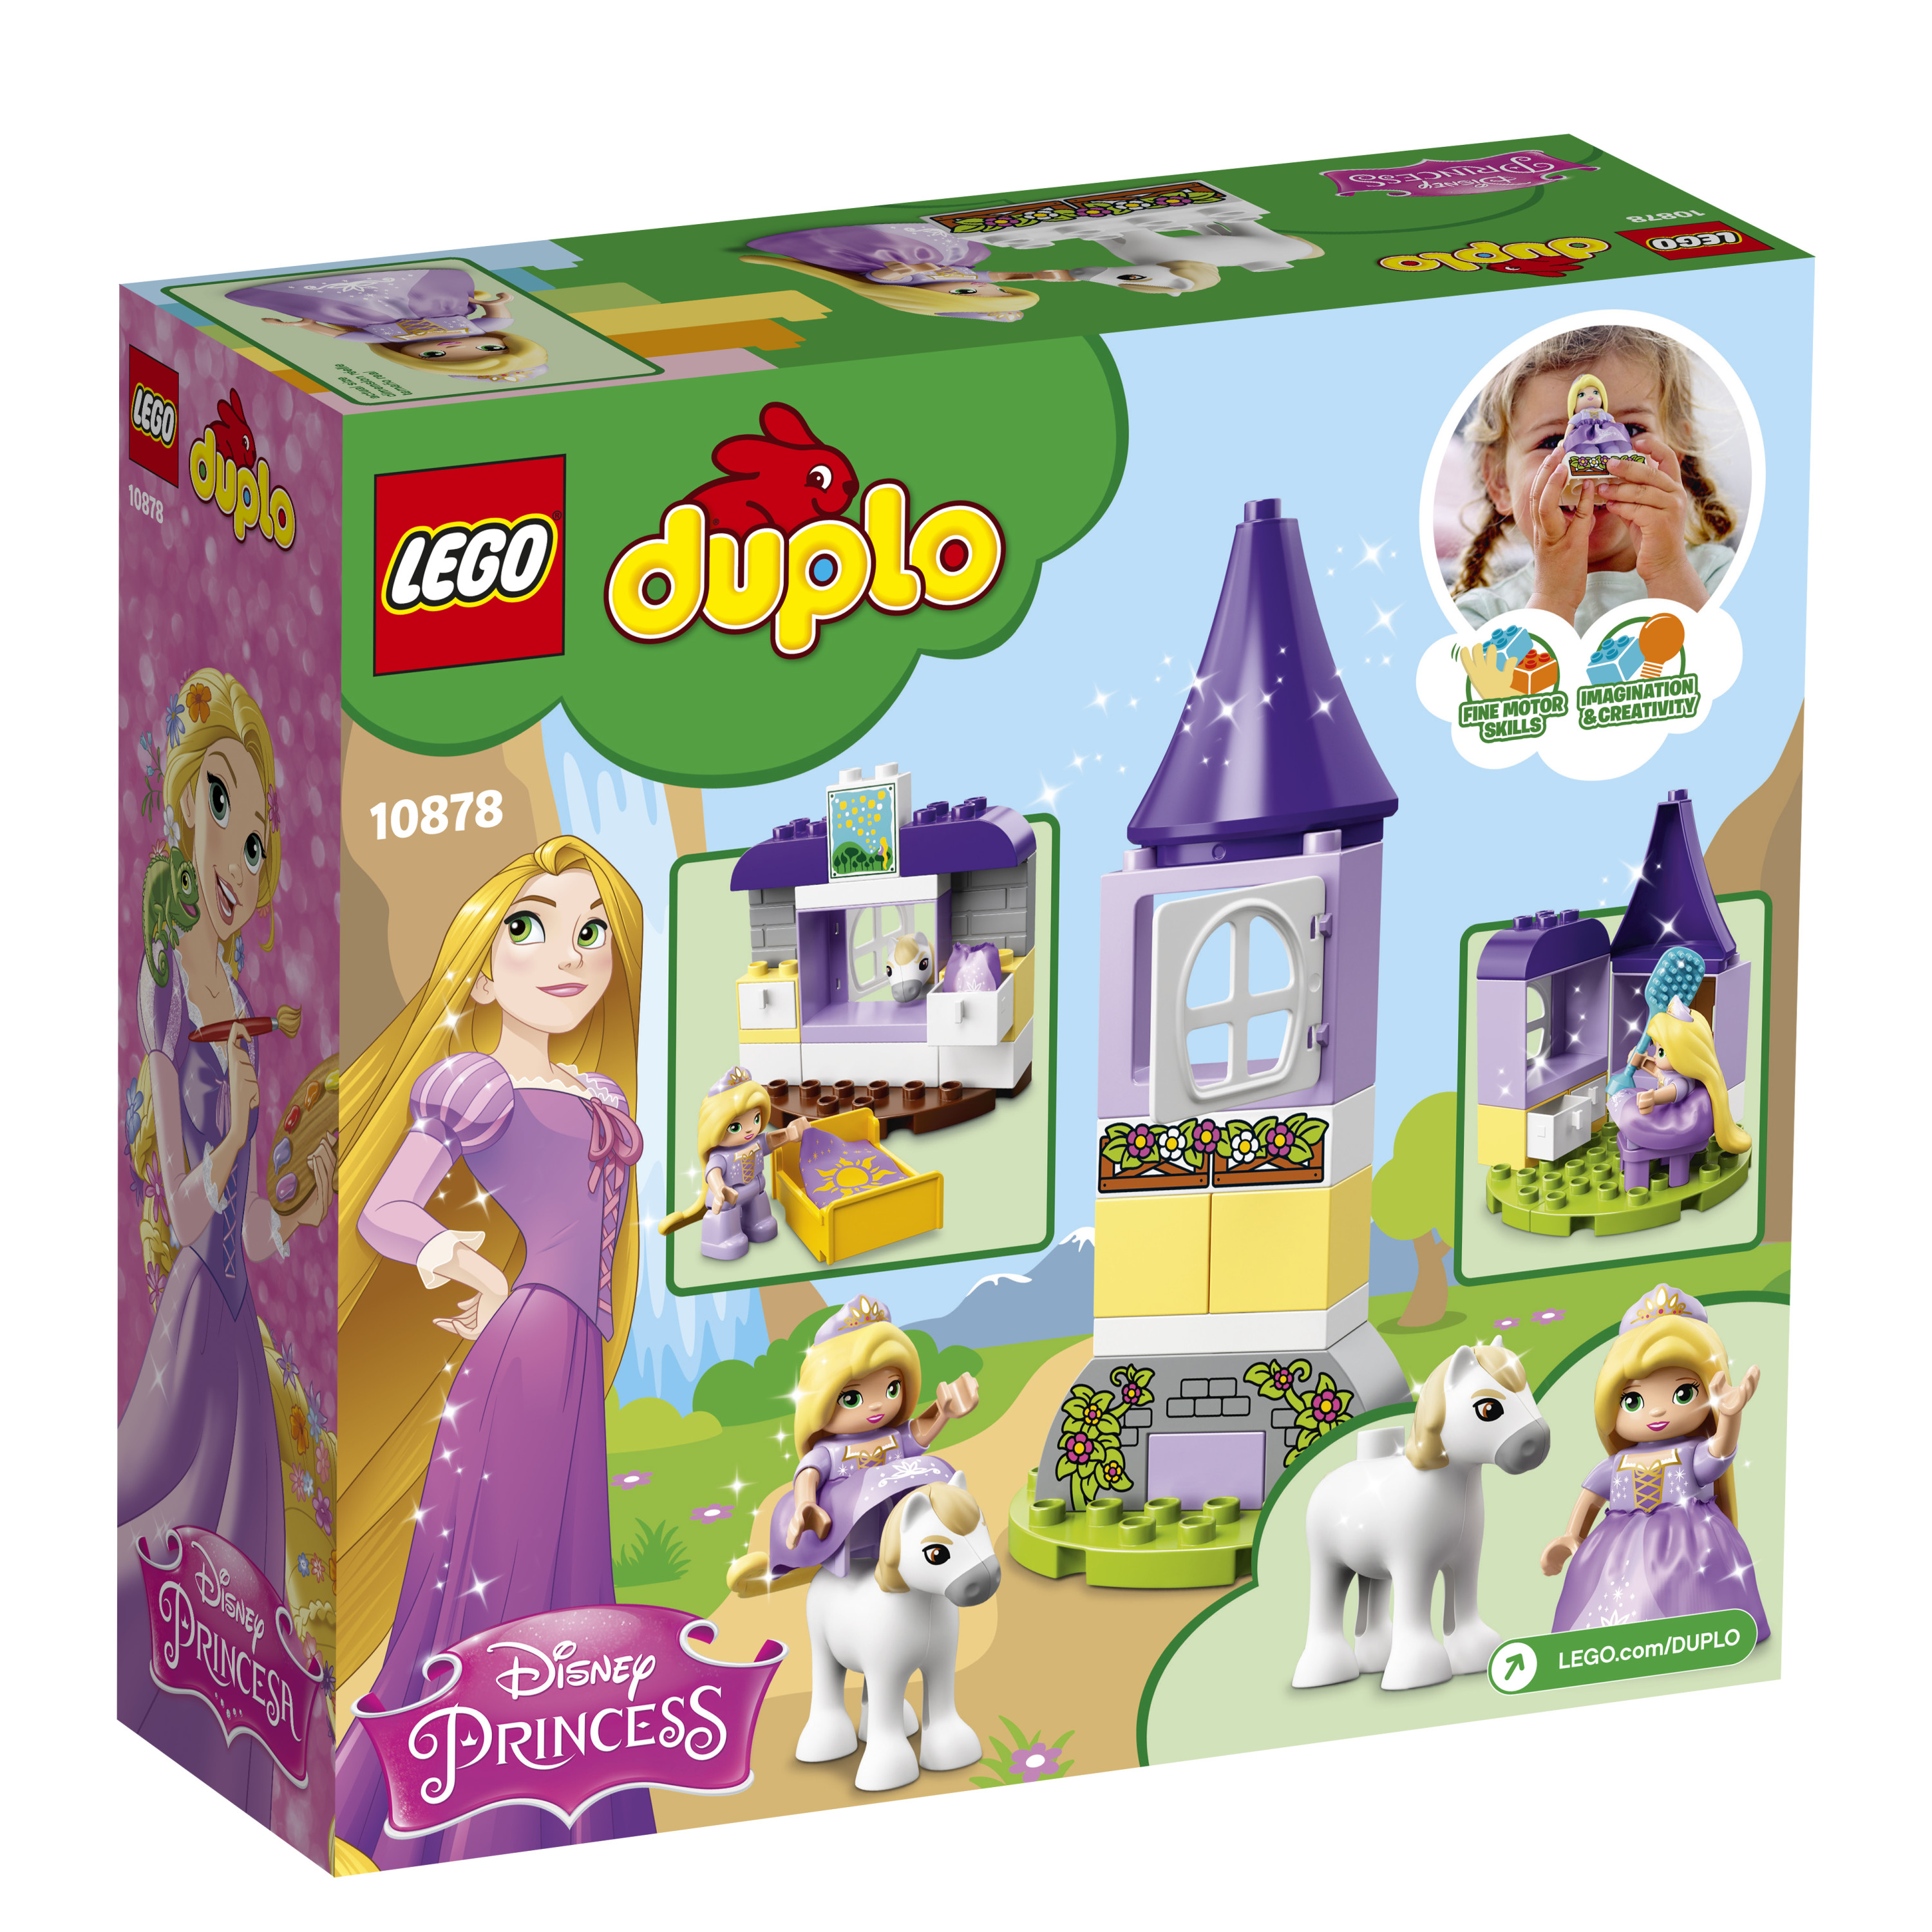 LEGO DUPLO Princess? Rapunzel´s Tower 10878 (37 Pieces) - image 4 of 6